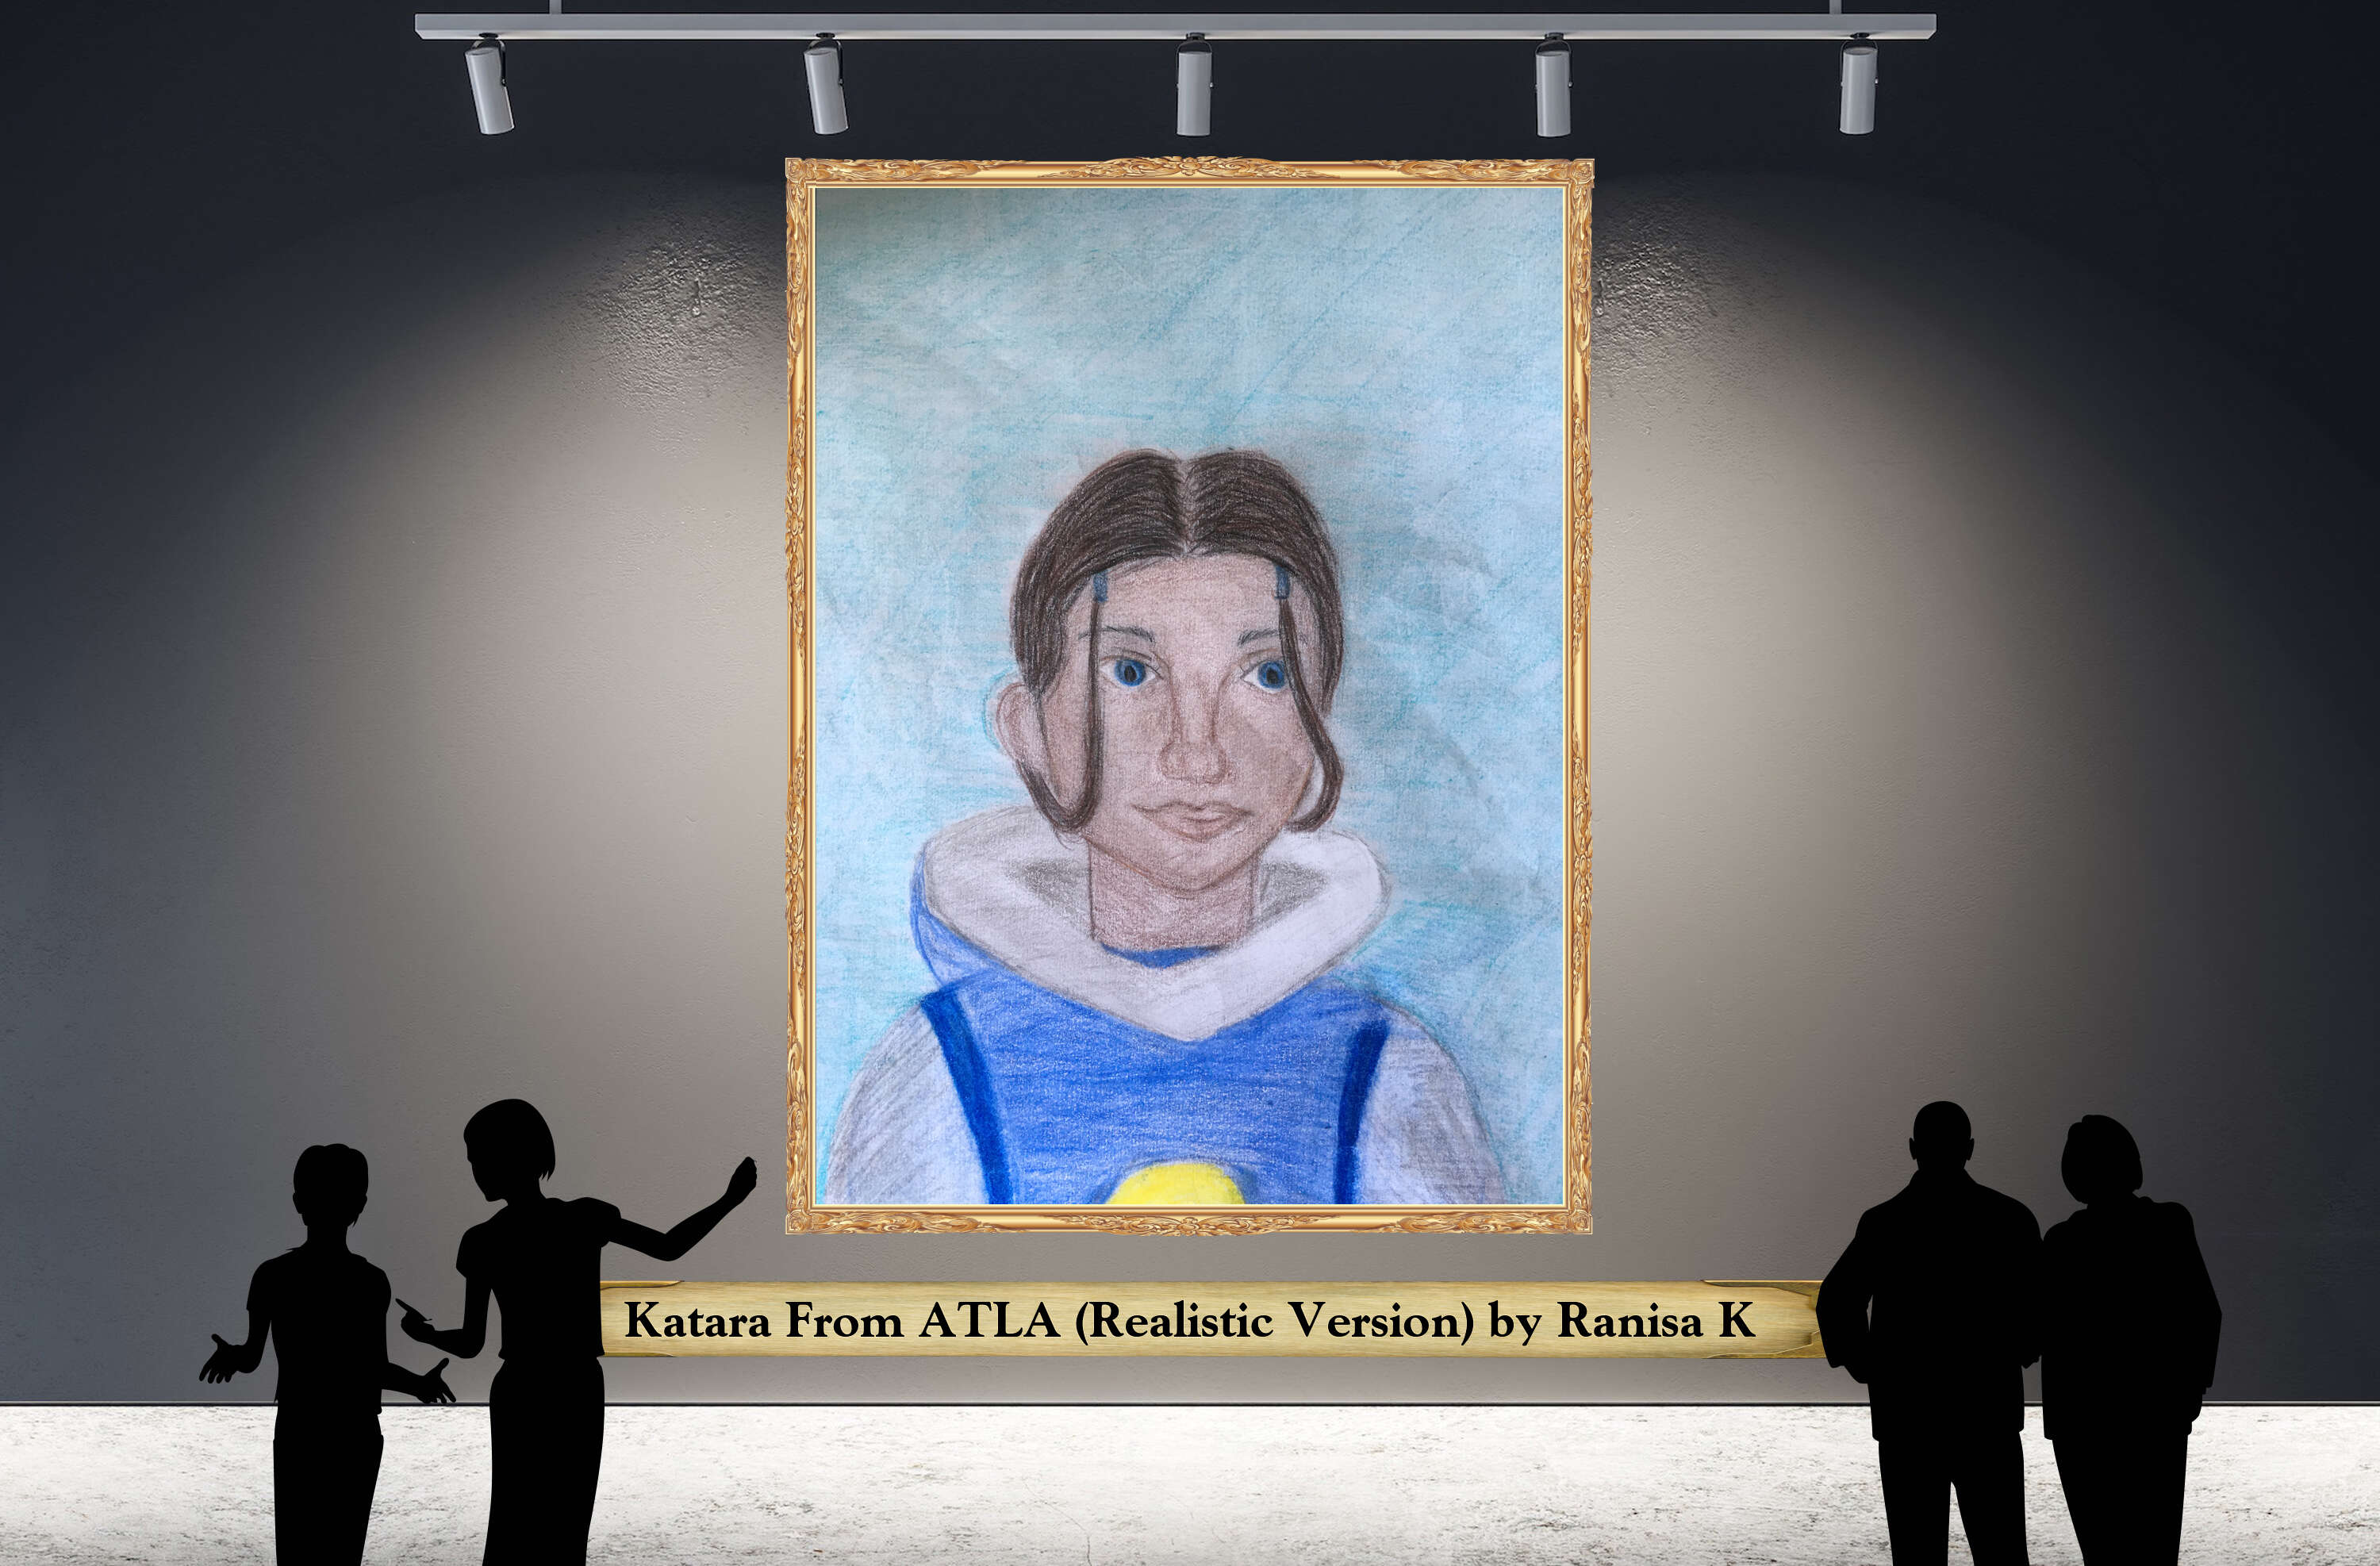 Katara From ATLA (Realistic Version) by Ranisa K